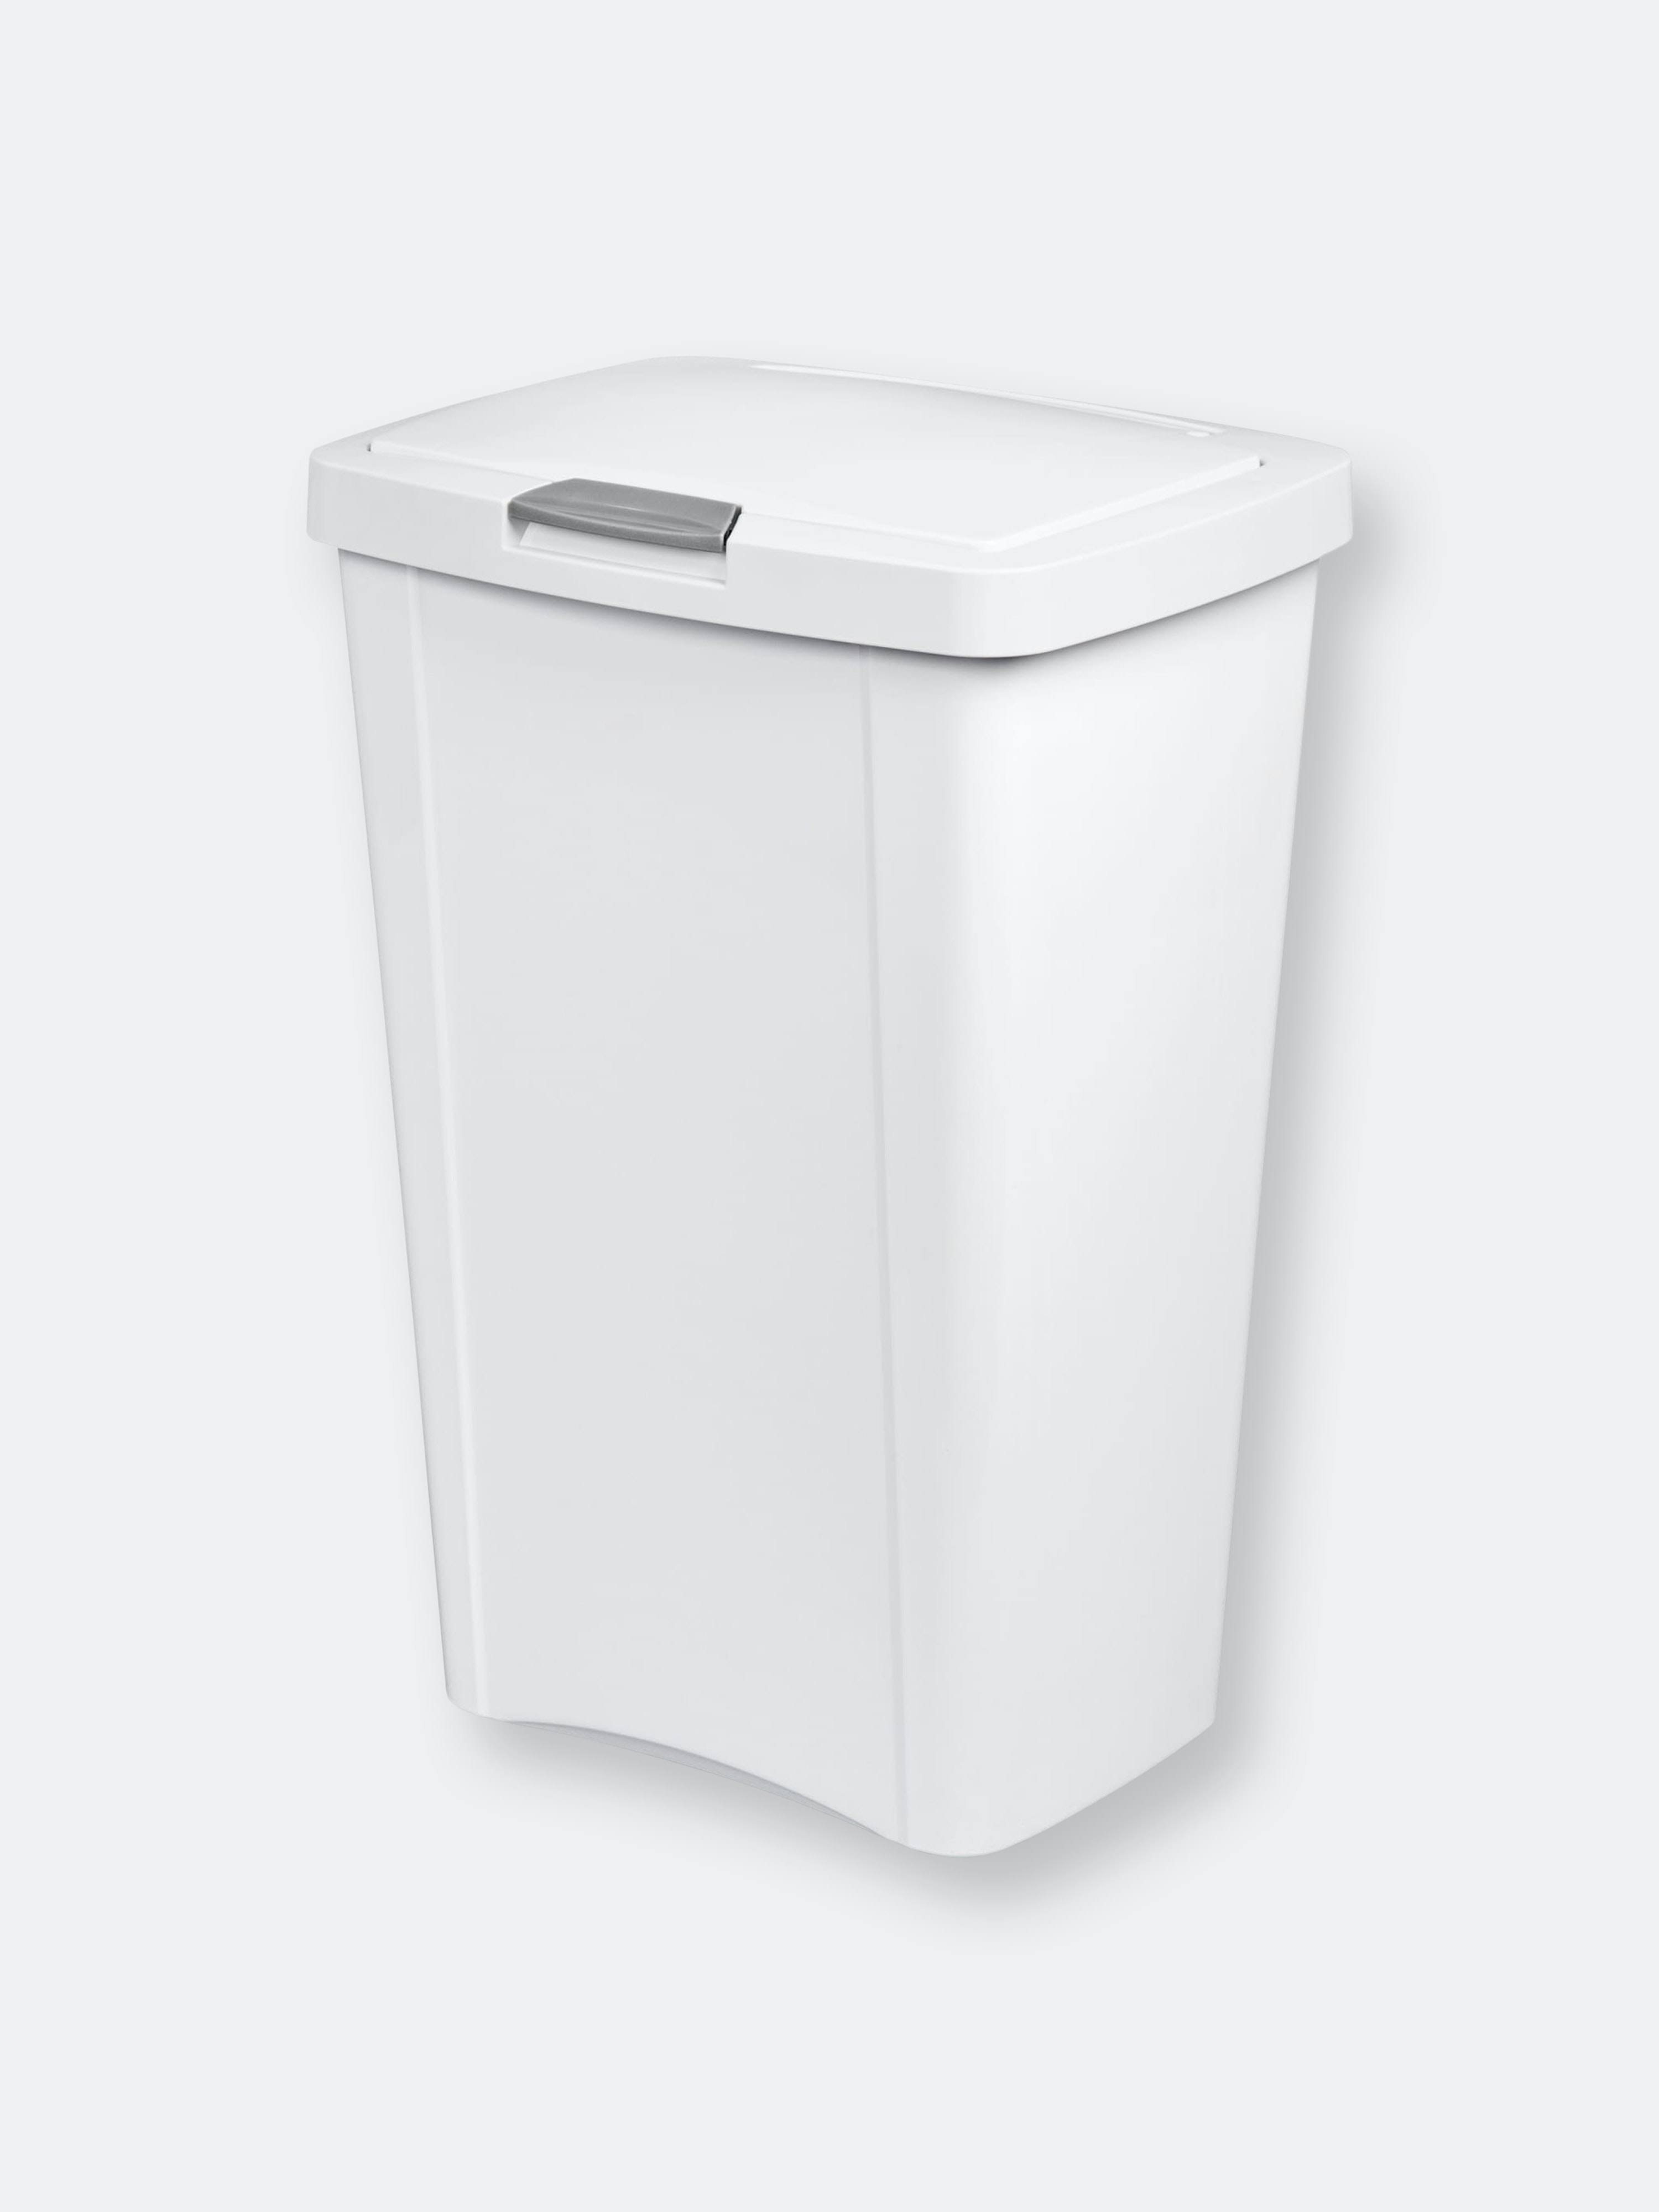 Sterilite Touchtop Wastebasket - White, 13gal